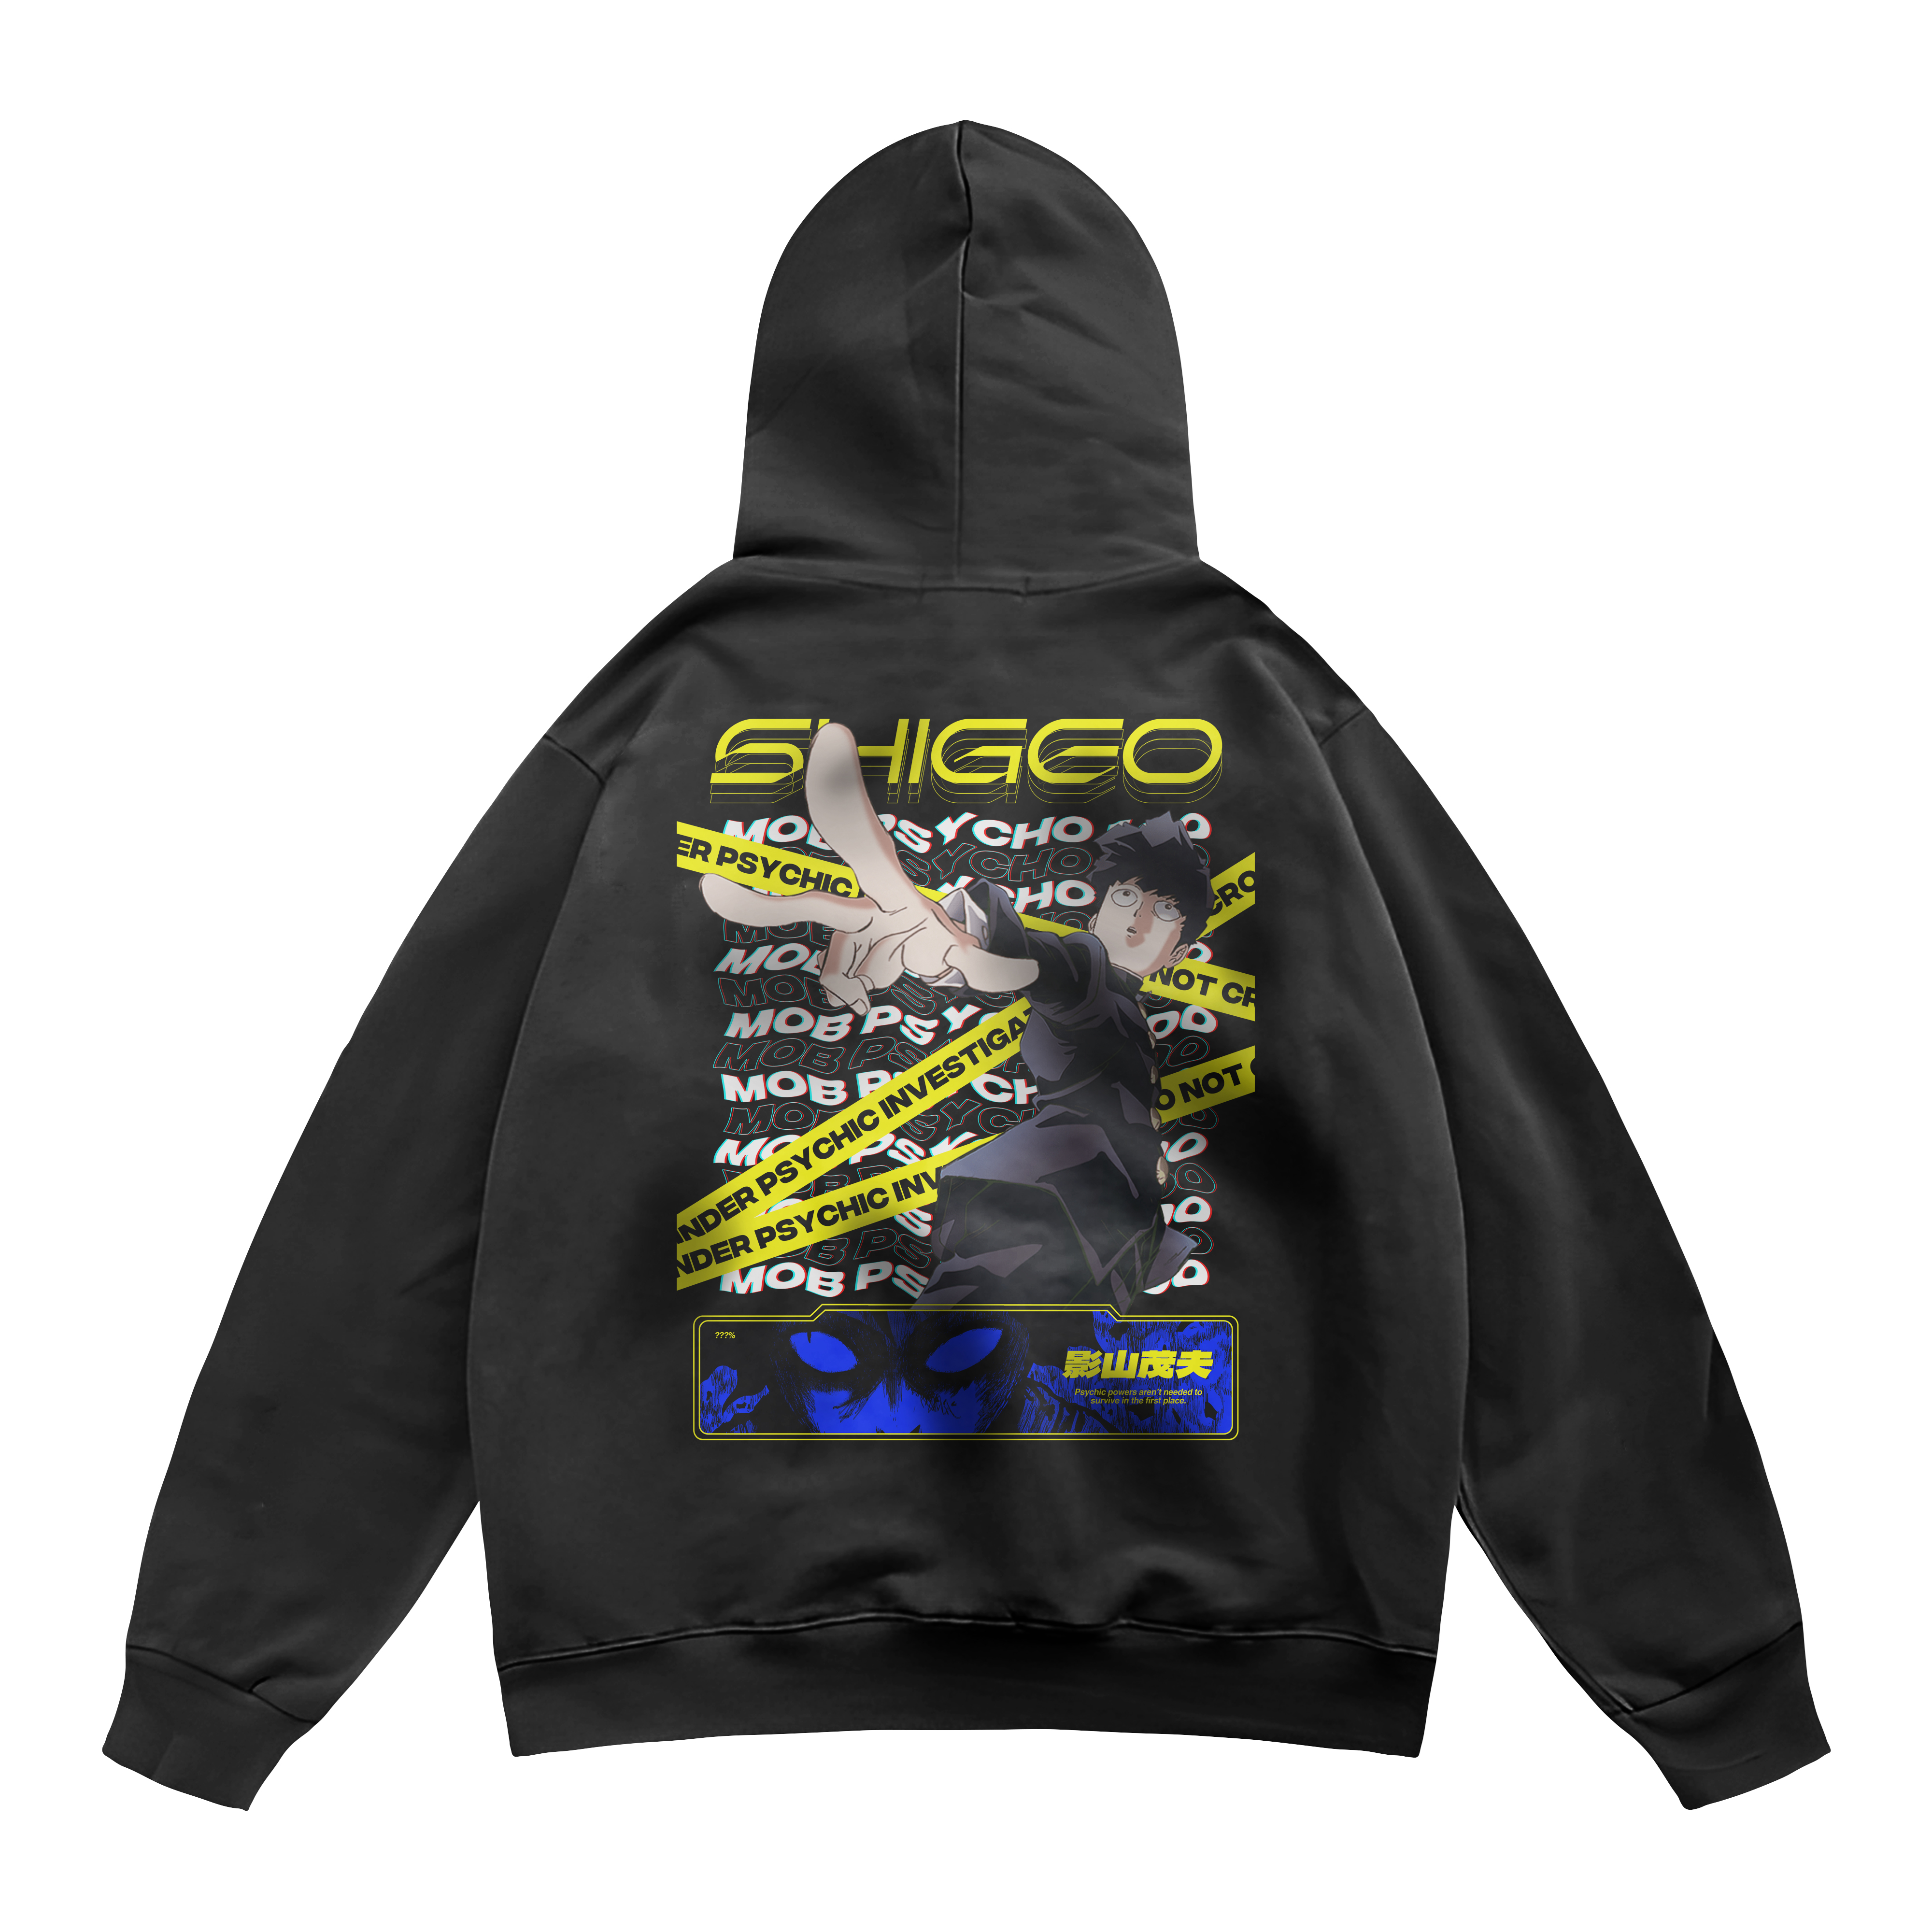 Shiggo Mob Psycho 100 | Hoodie